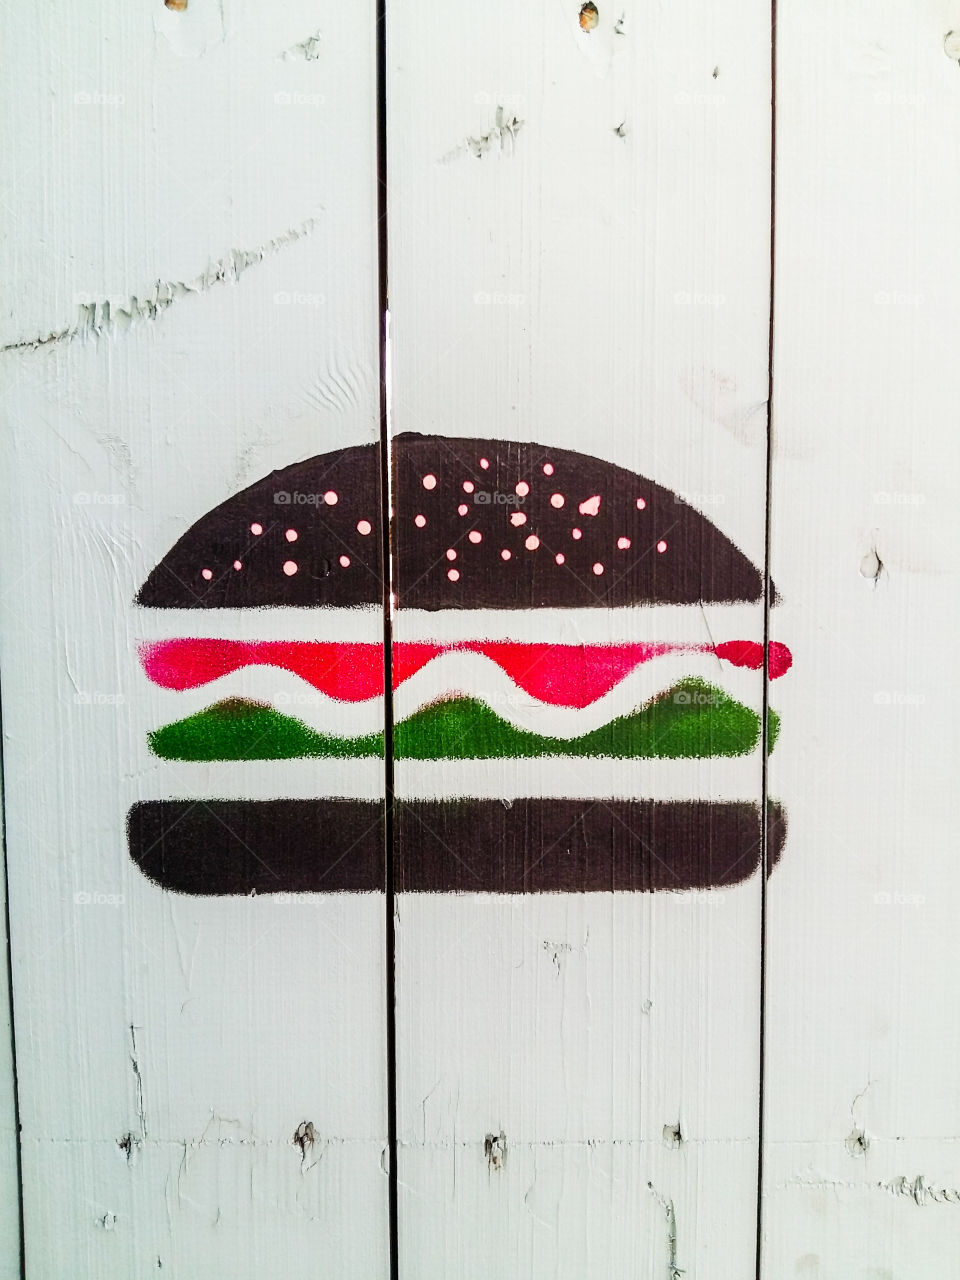 graffiti burger on white wooden boards